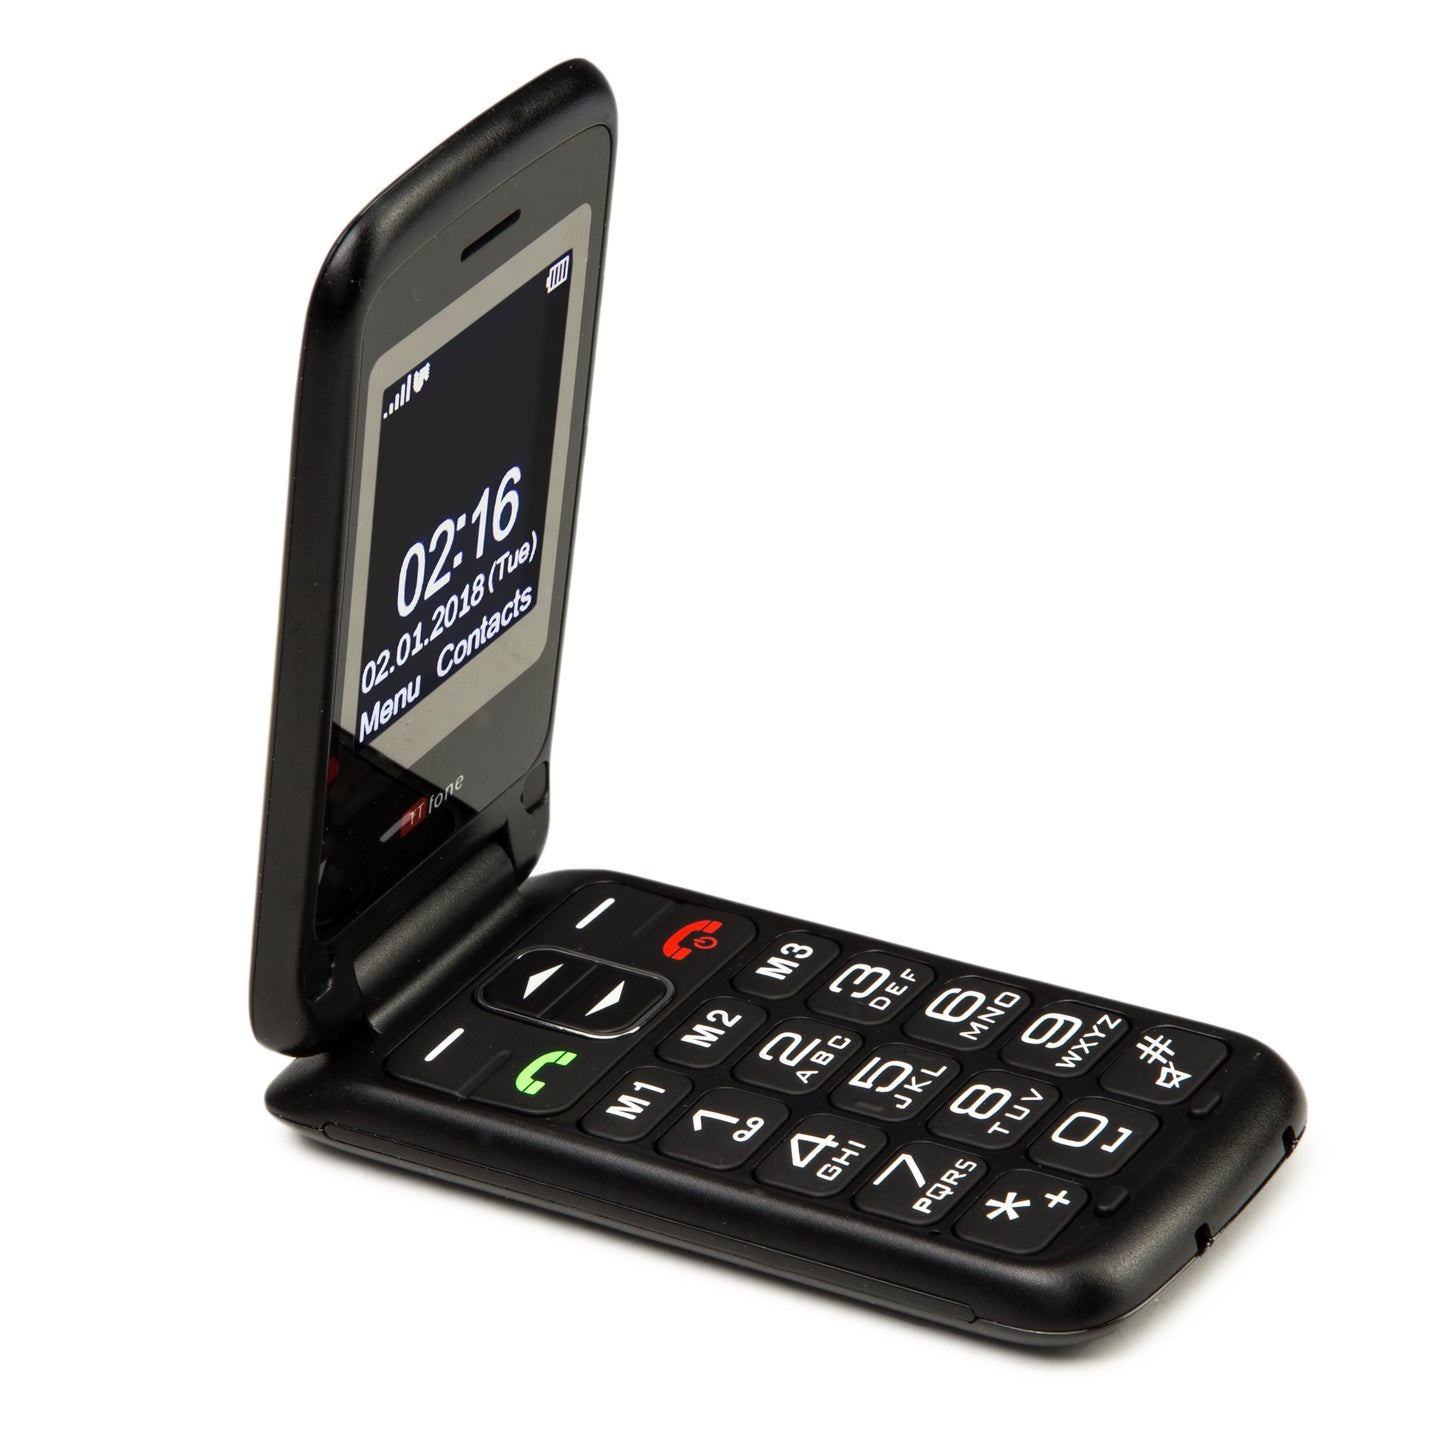 TTfone Nova TT650 No Dock Charger - Warehouse Deals with EE Pay As You Go Sim Card